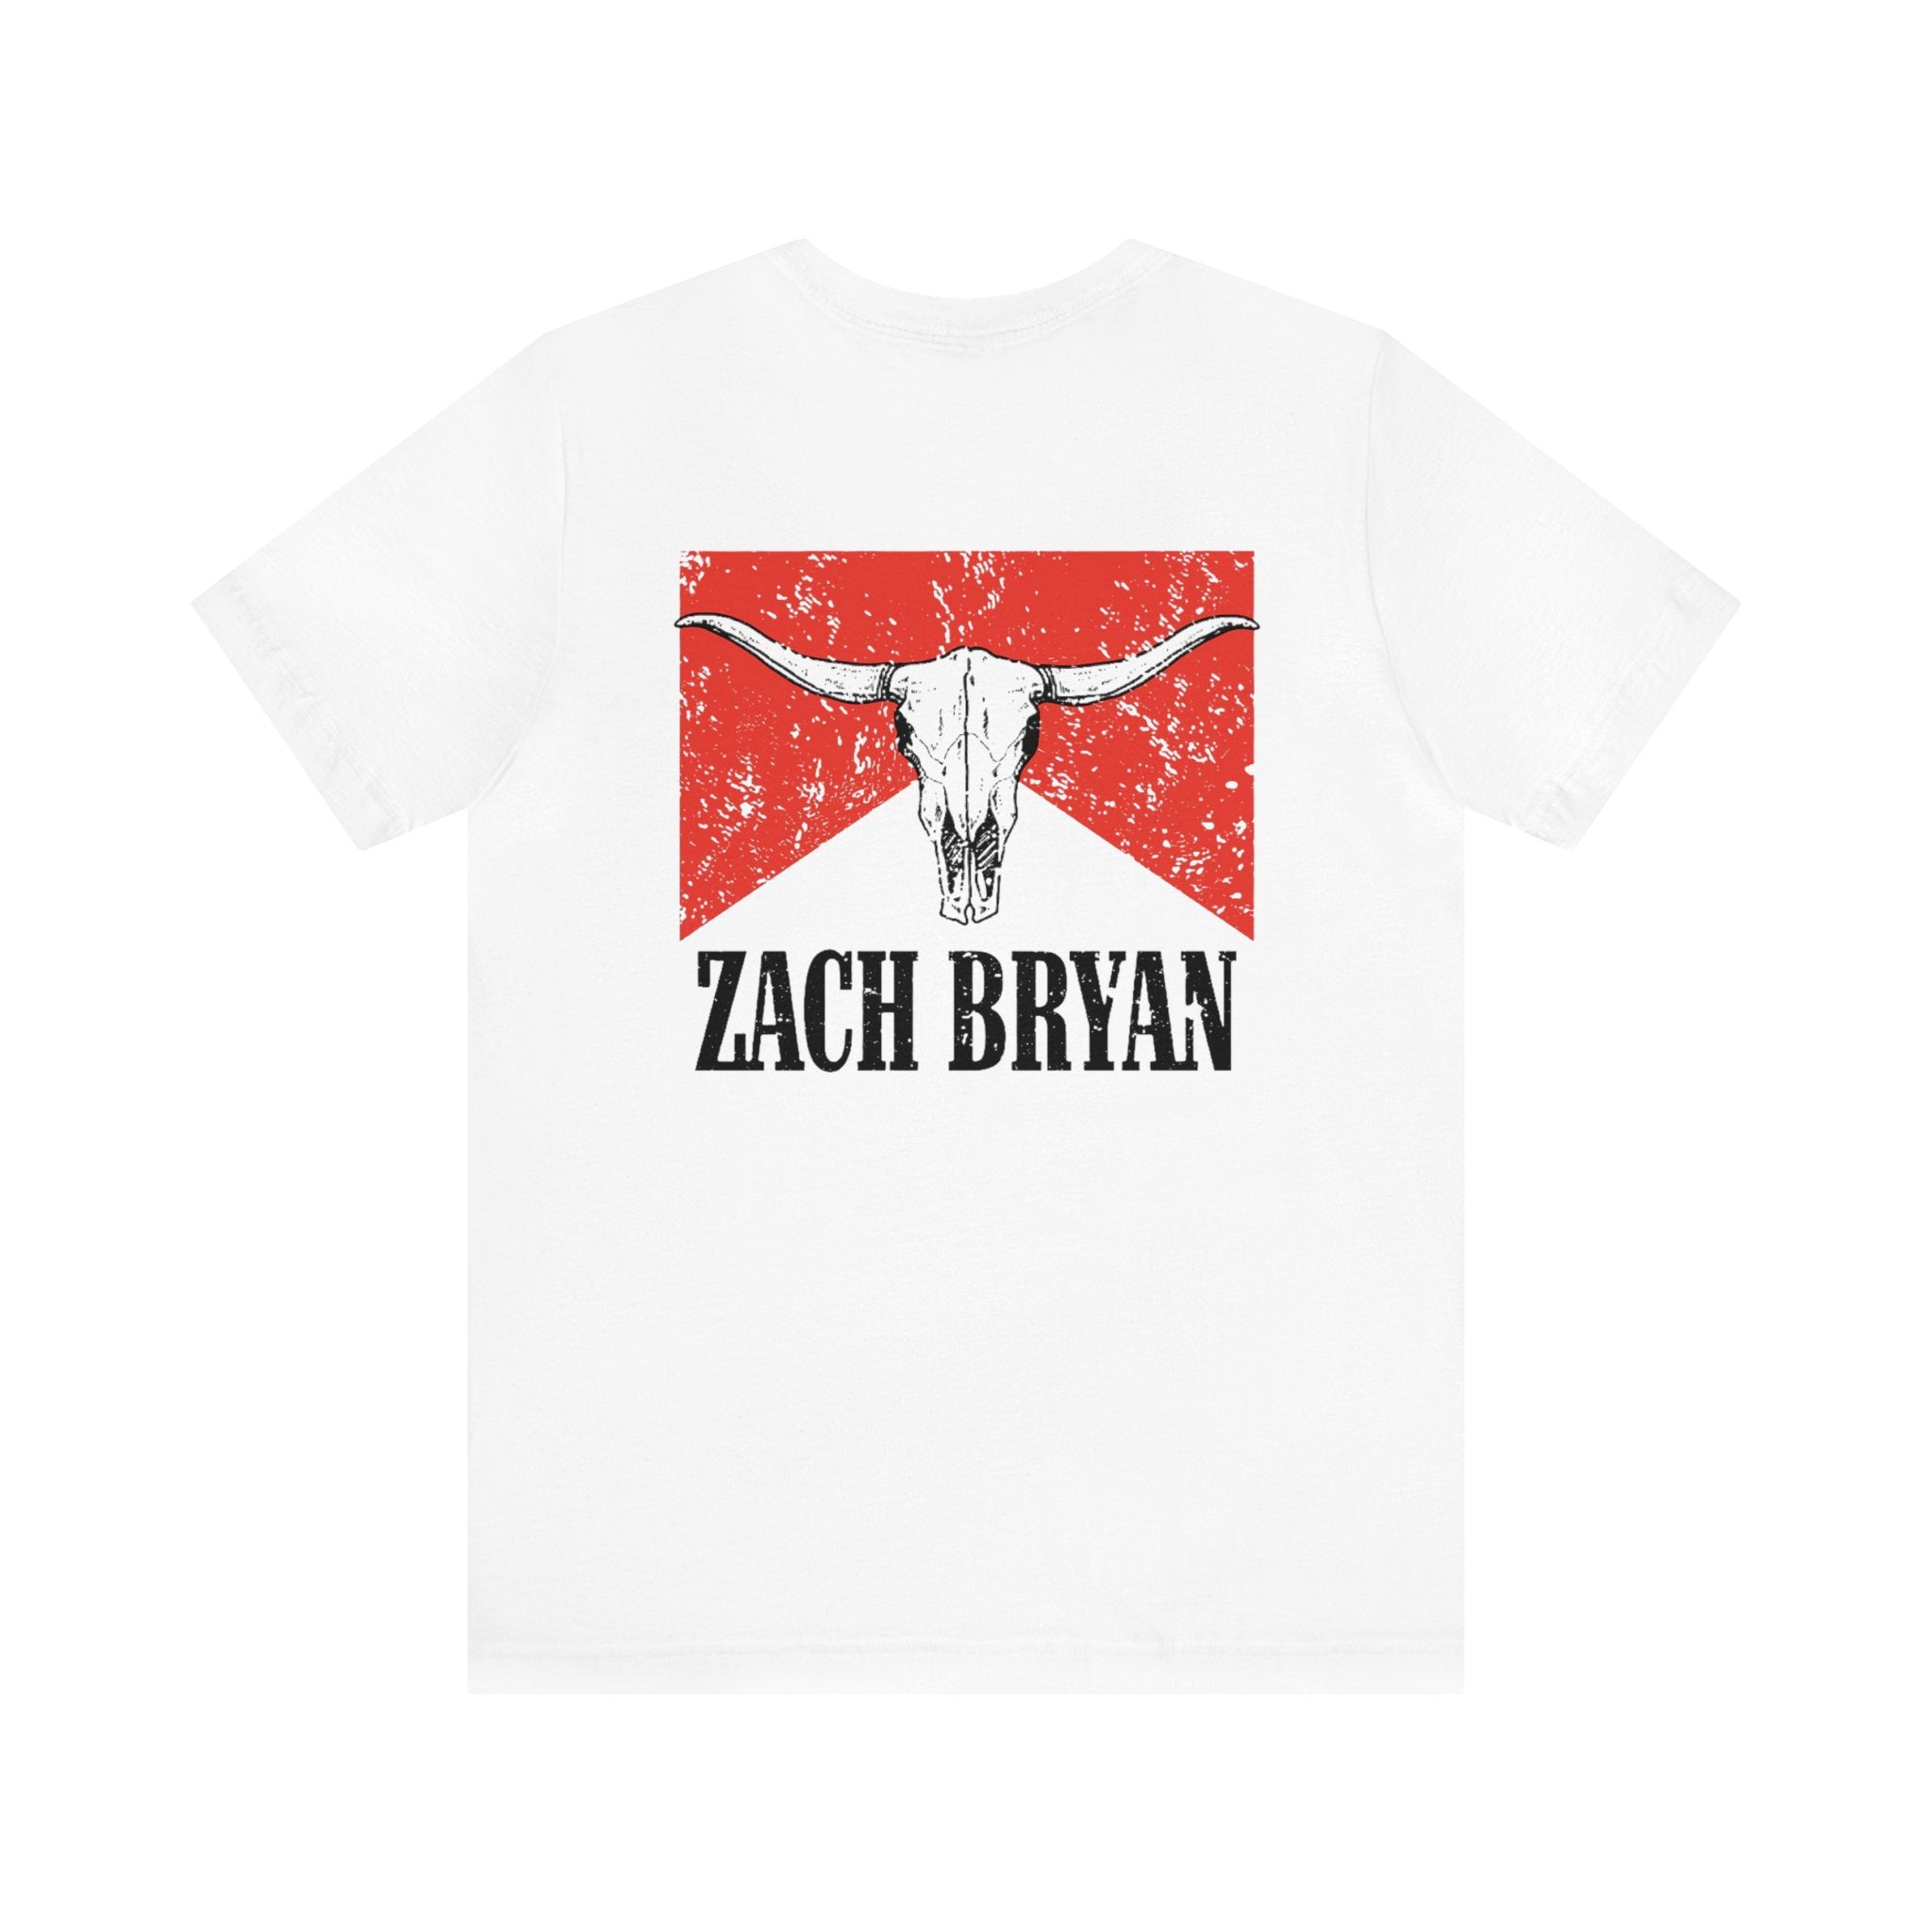 Zach Bryan T-Shirt 1 | Zach Bryan